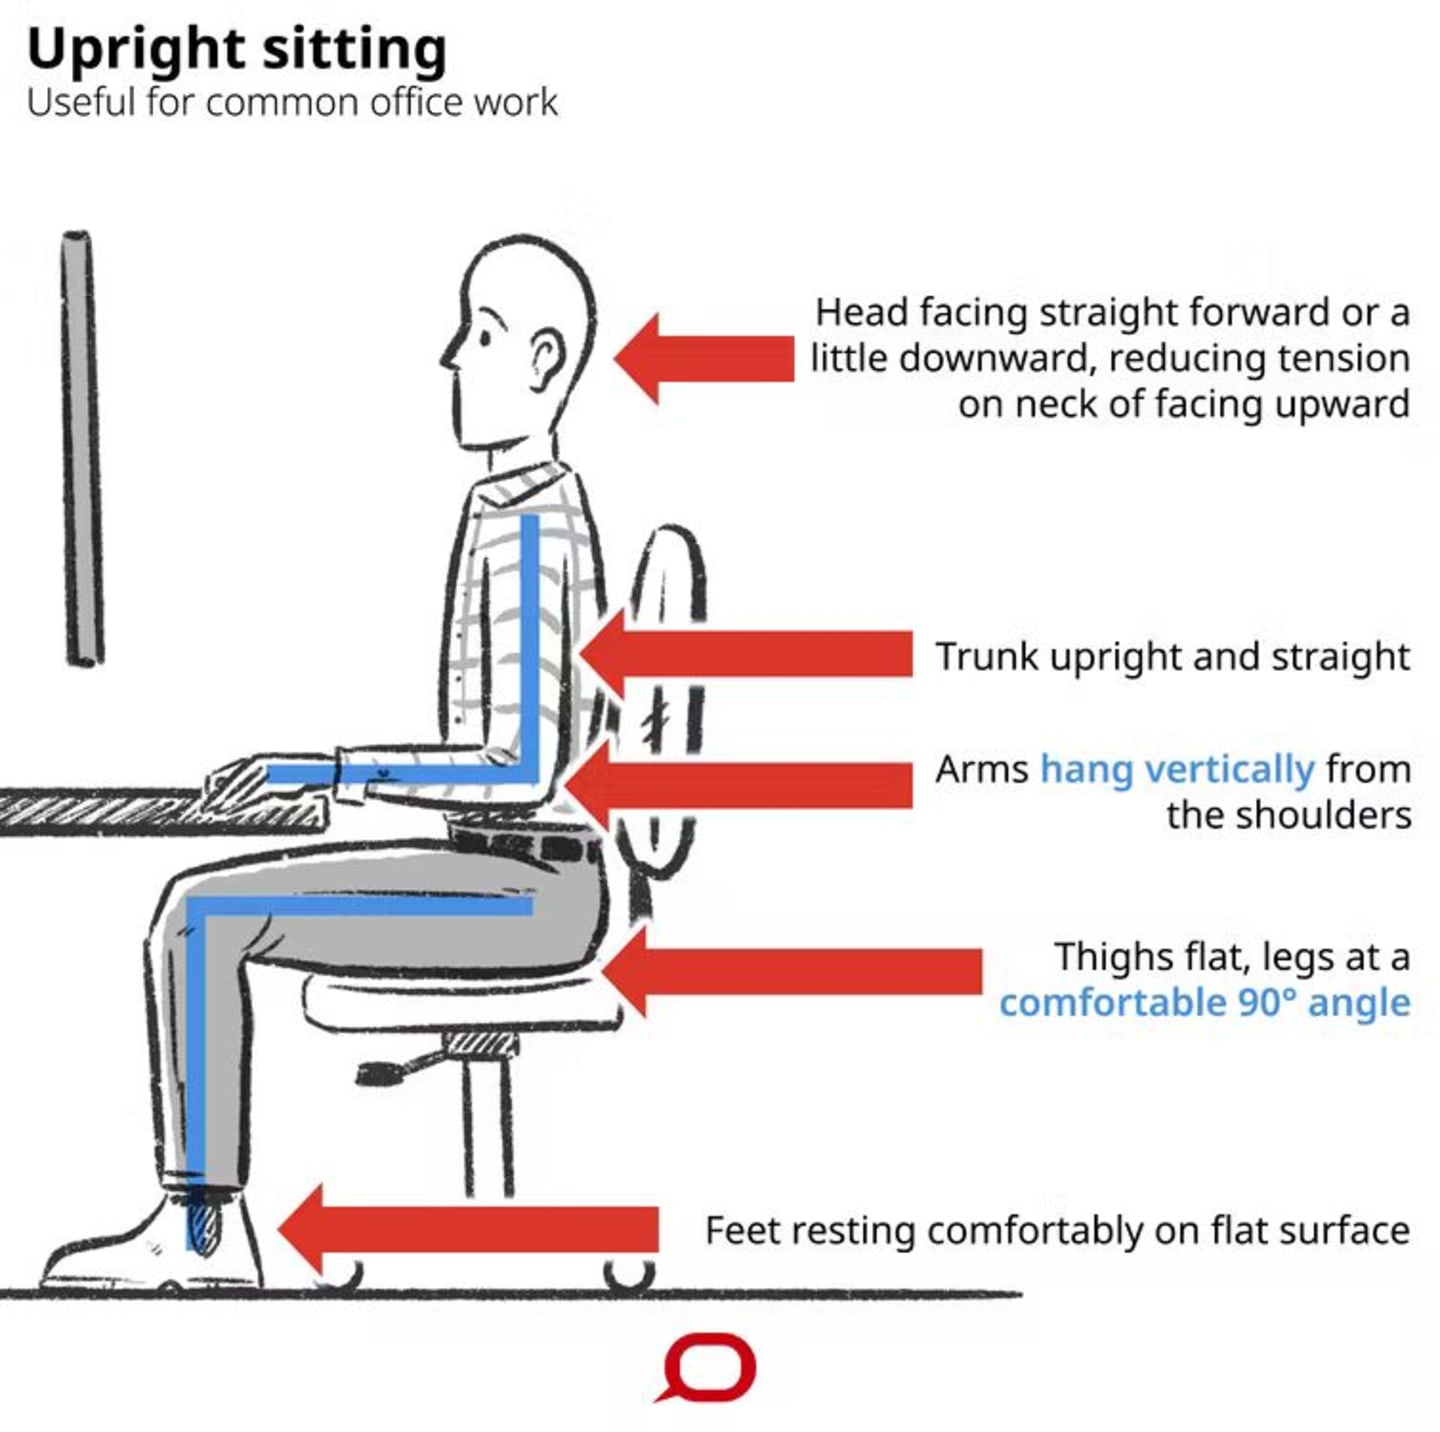 Upright sitting